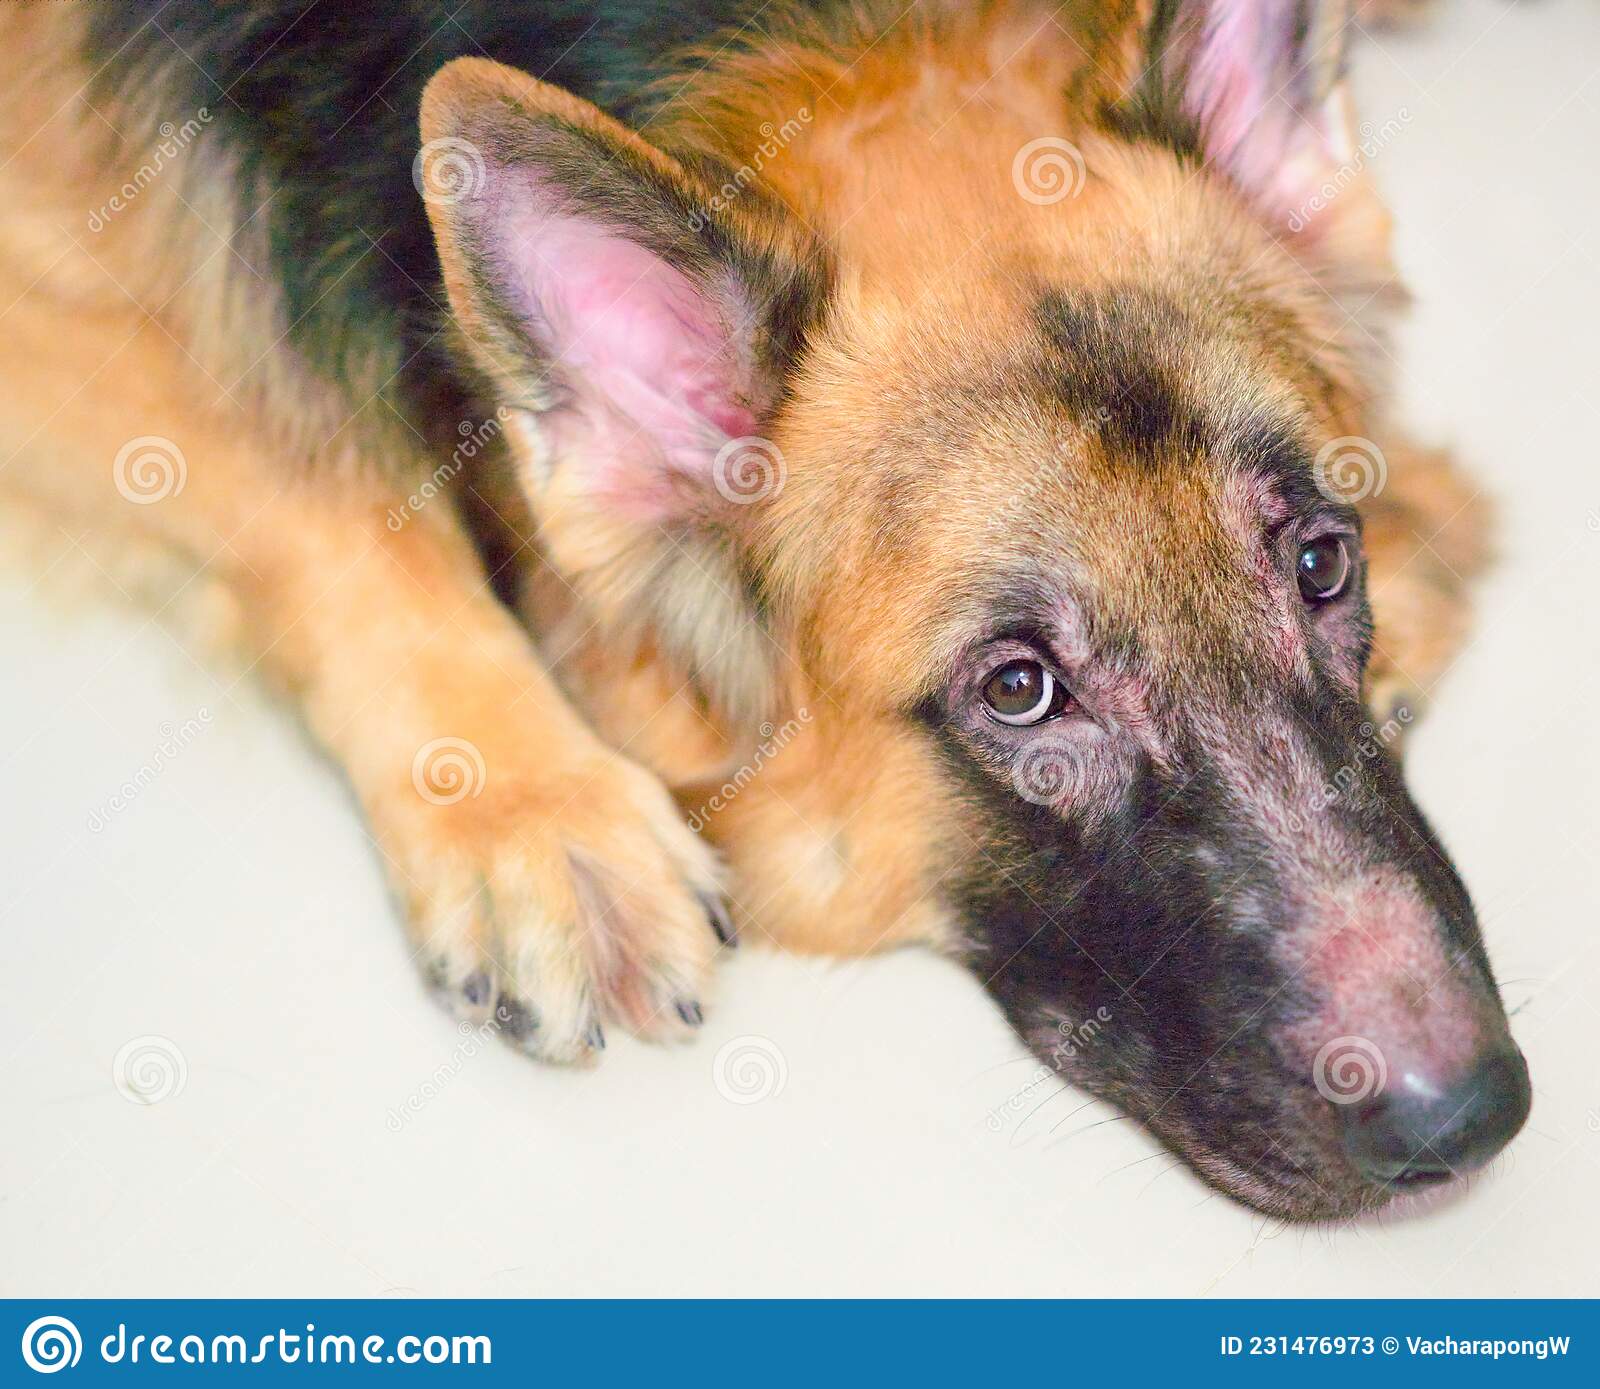 German Shepherd Dog Face with Allergic Rhinitis Dermatitis Skin Problem ...